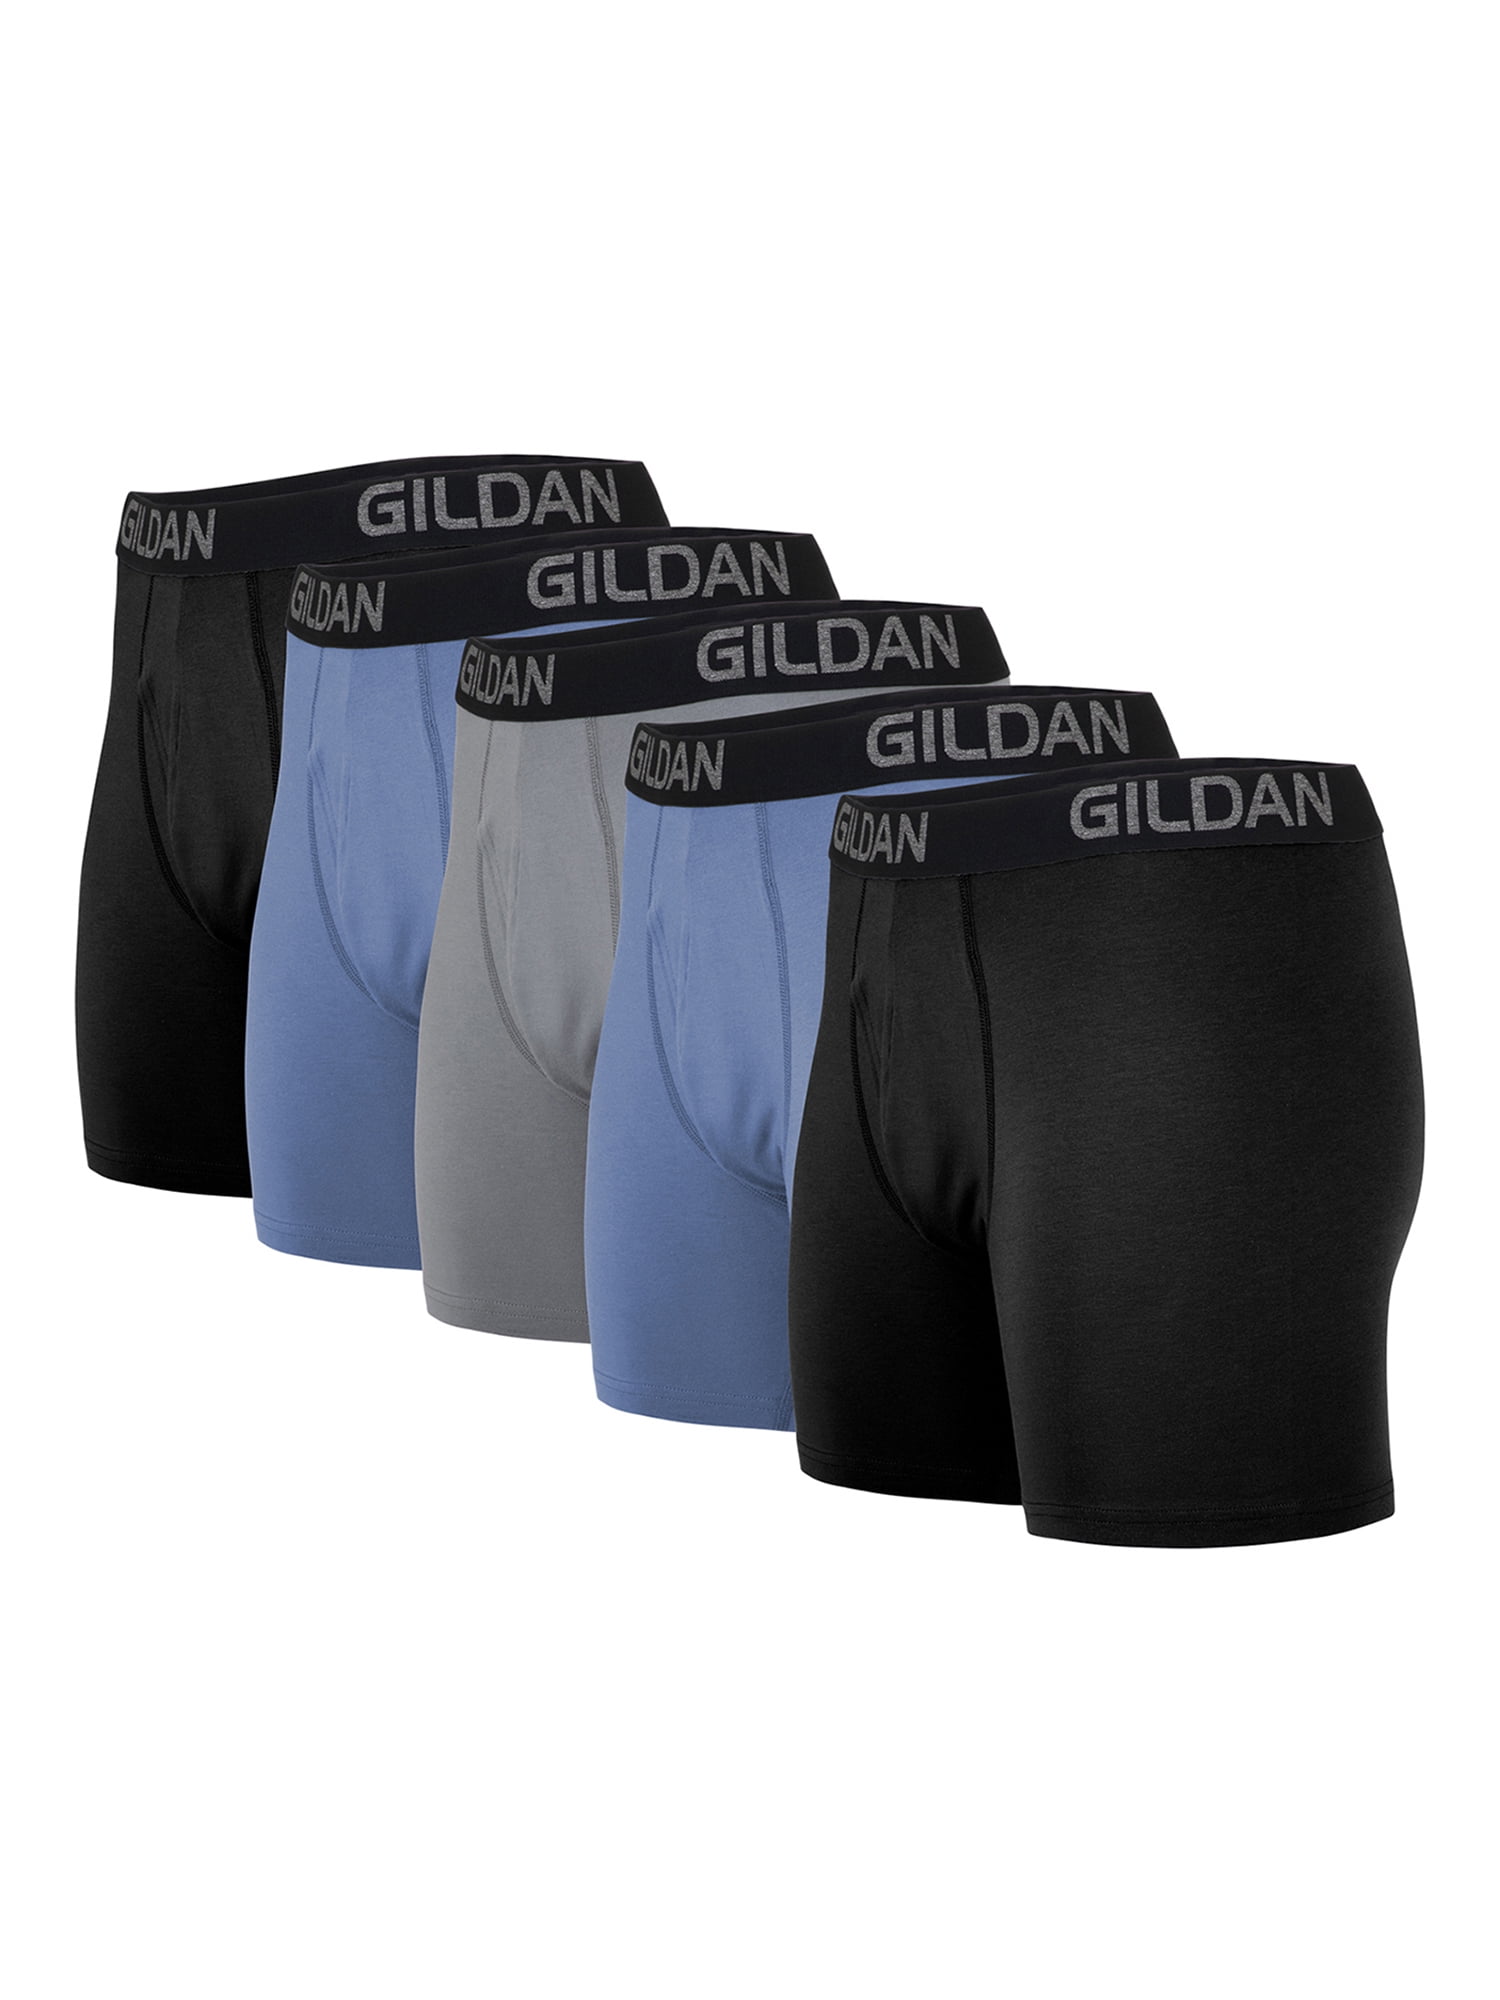 mens woven check boxer shorts cotton rich underwear breifs short trunks 3 6 9 12 